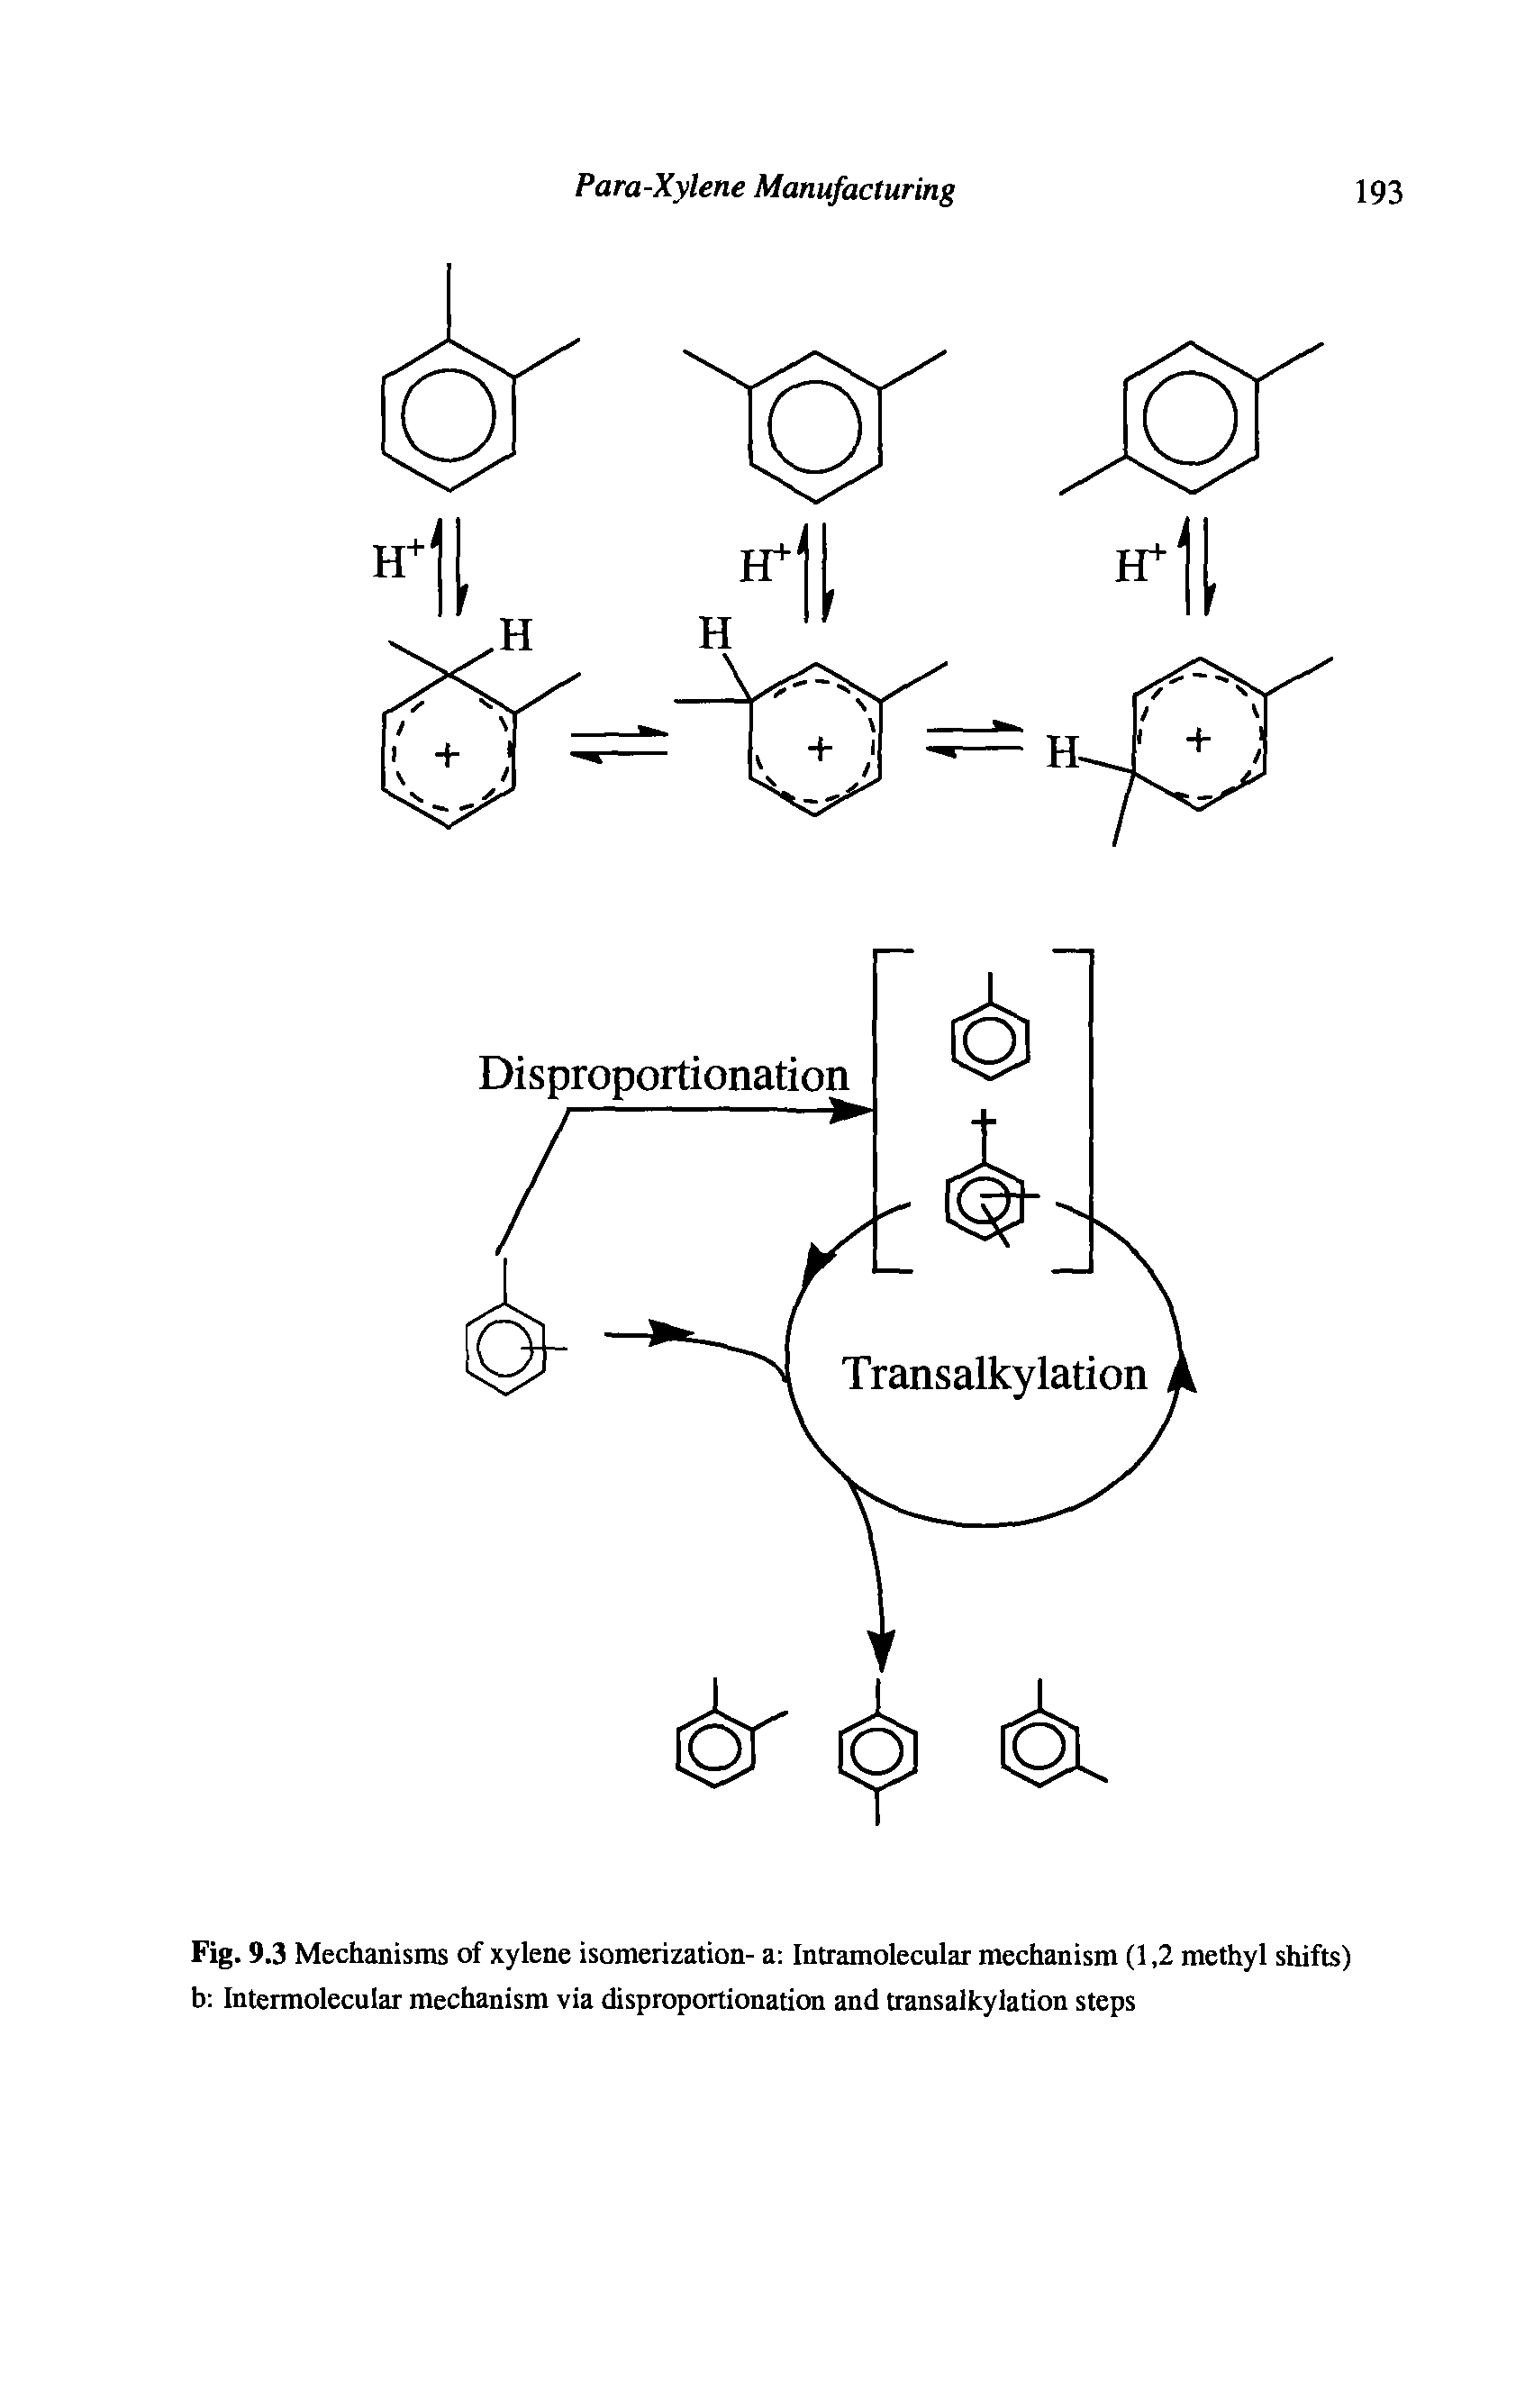 Fig.9.3 Mechanisms of xylene isomerization- a Intramolecular mechanism (1,2 methyl shifts) b Intermolecular mechanism via disproportionation and transalkylation steps...